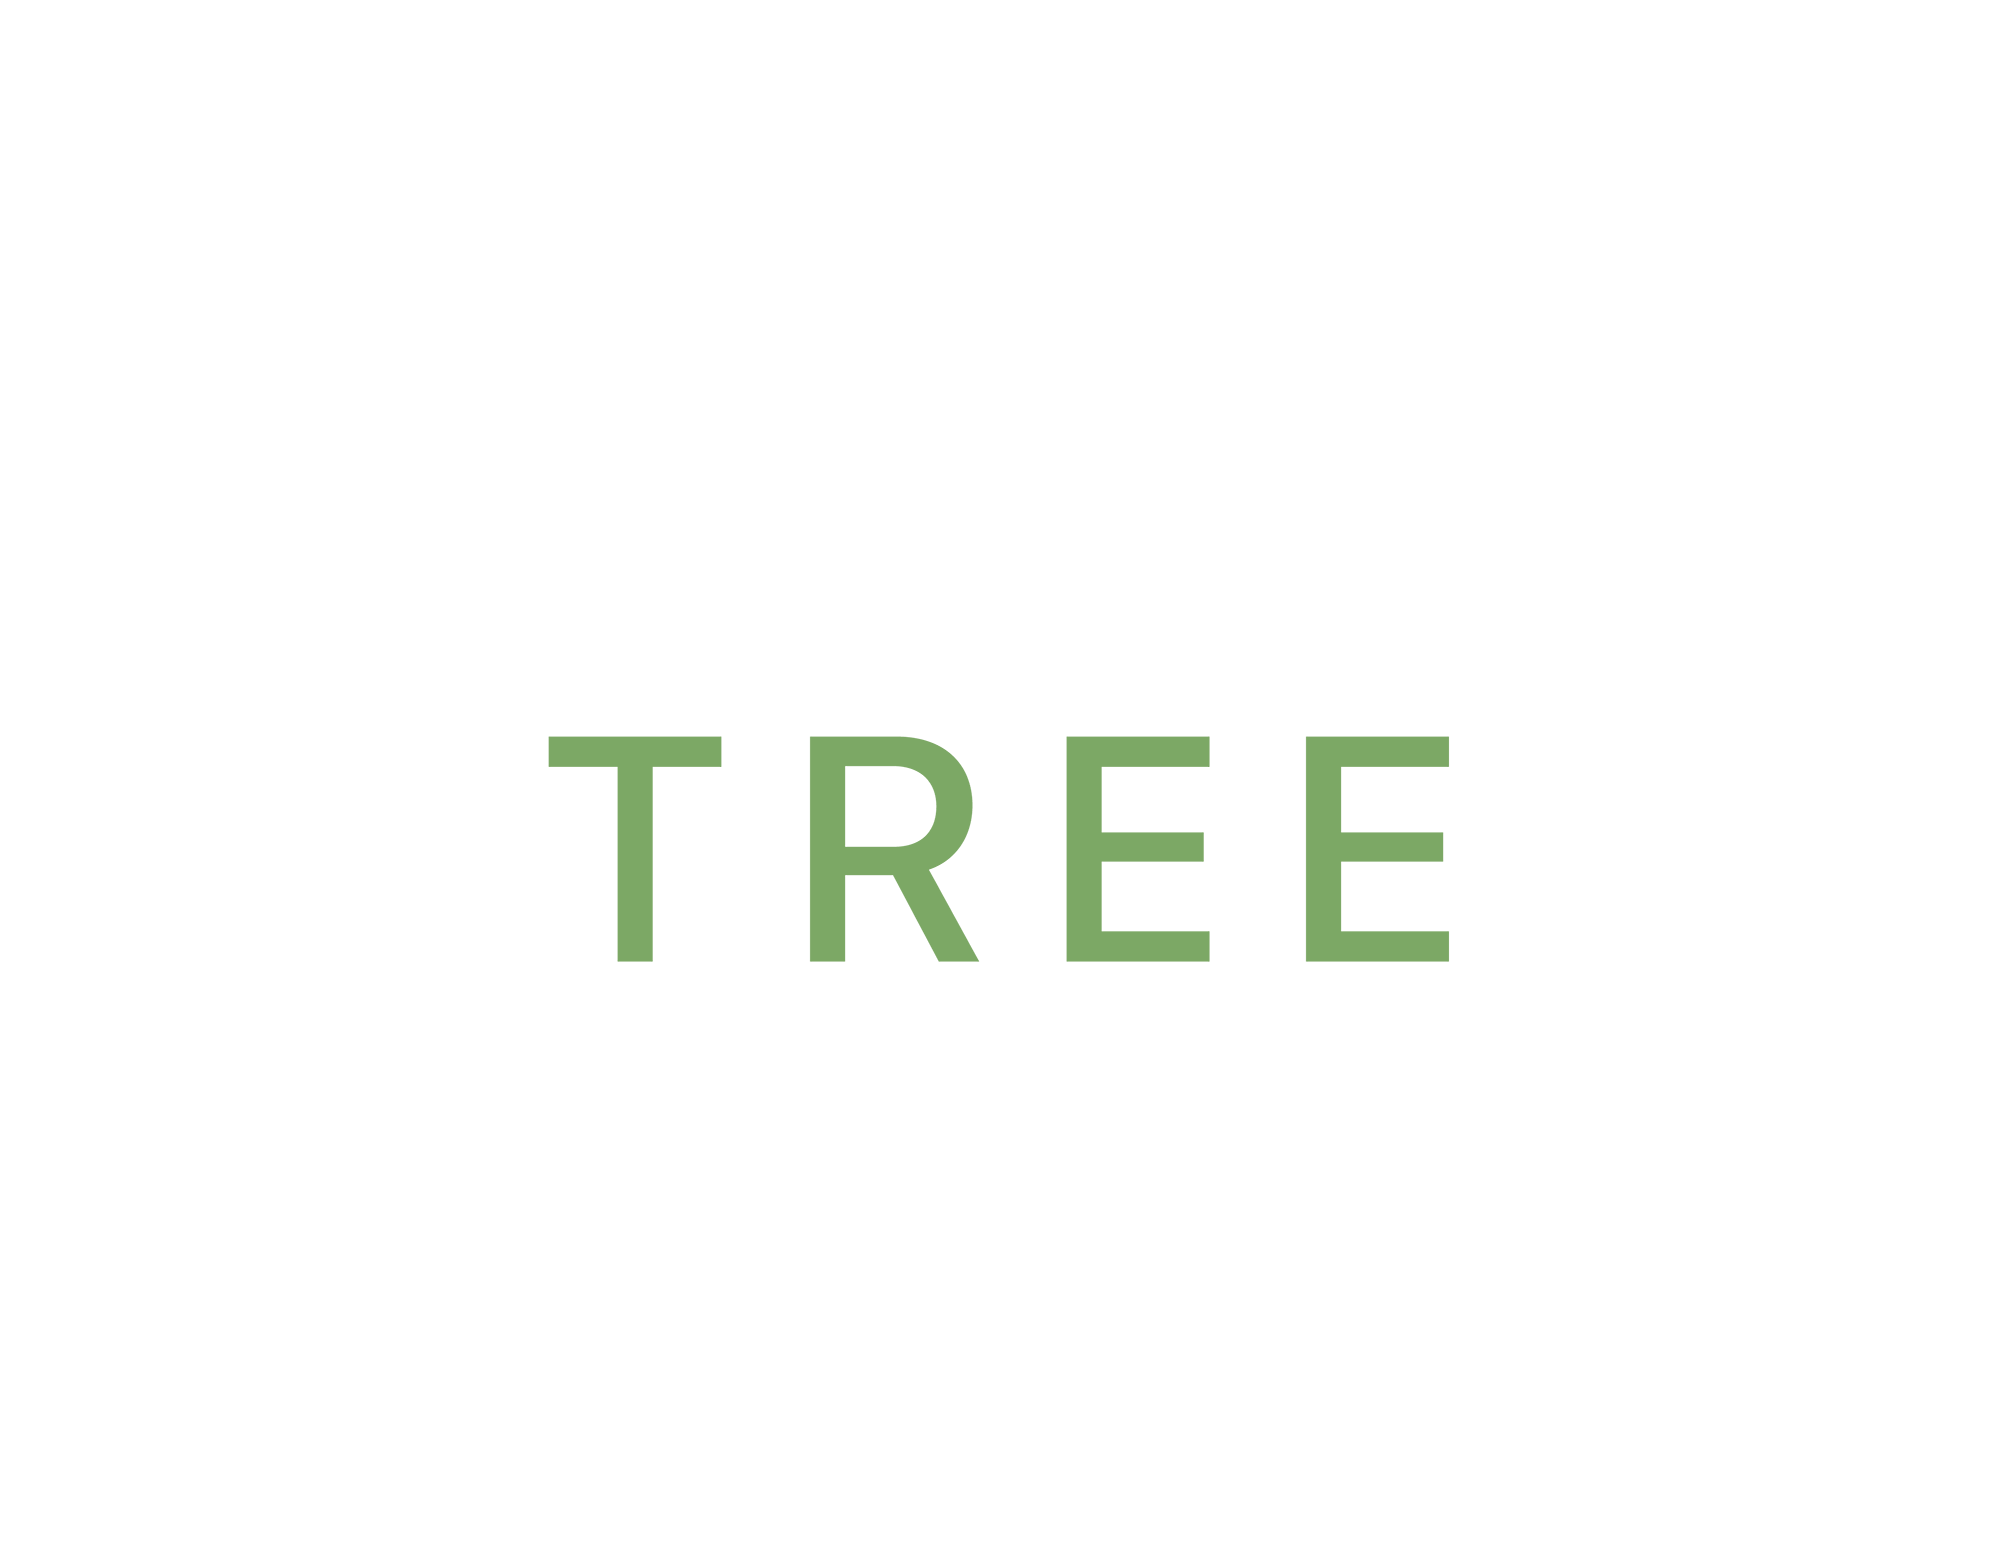 Wood street studio